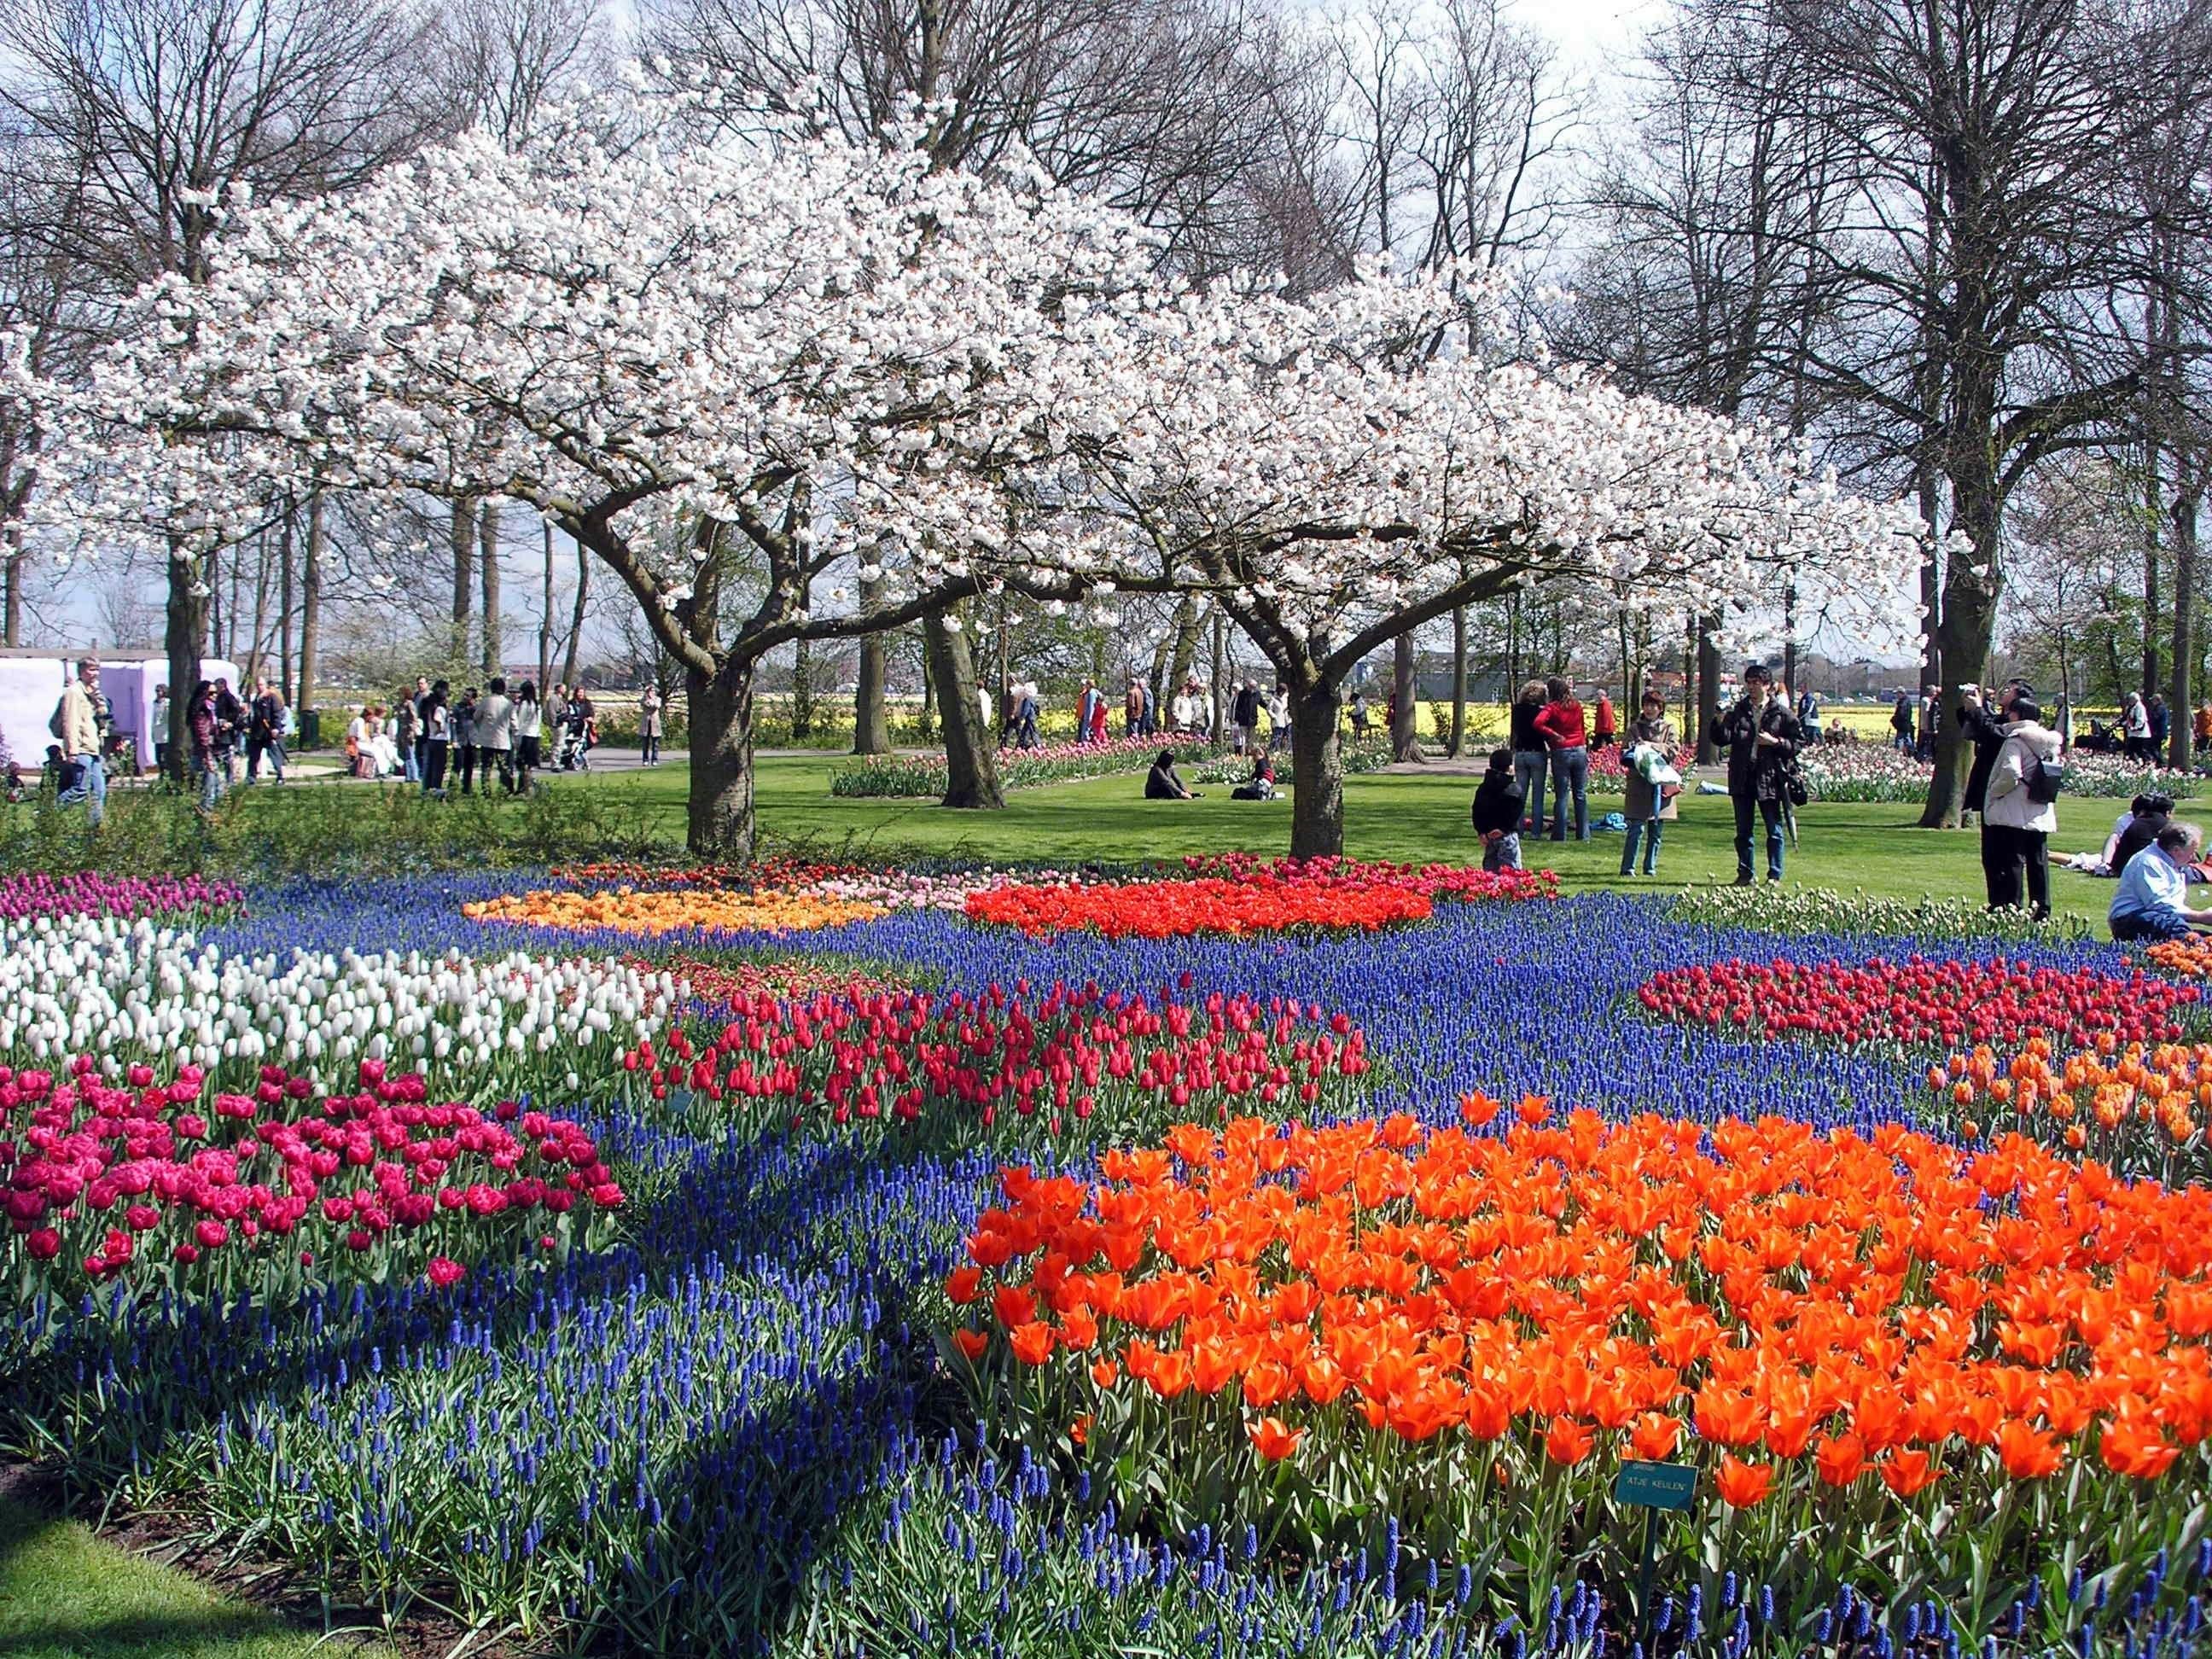 Tulips, Horror, Tree, Beautiful, Park, Peoples, Trees, Flower